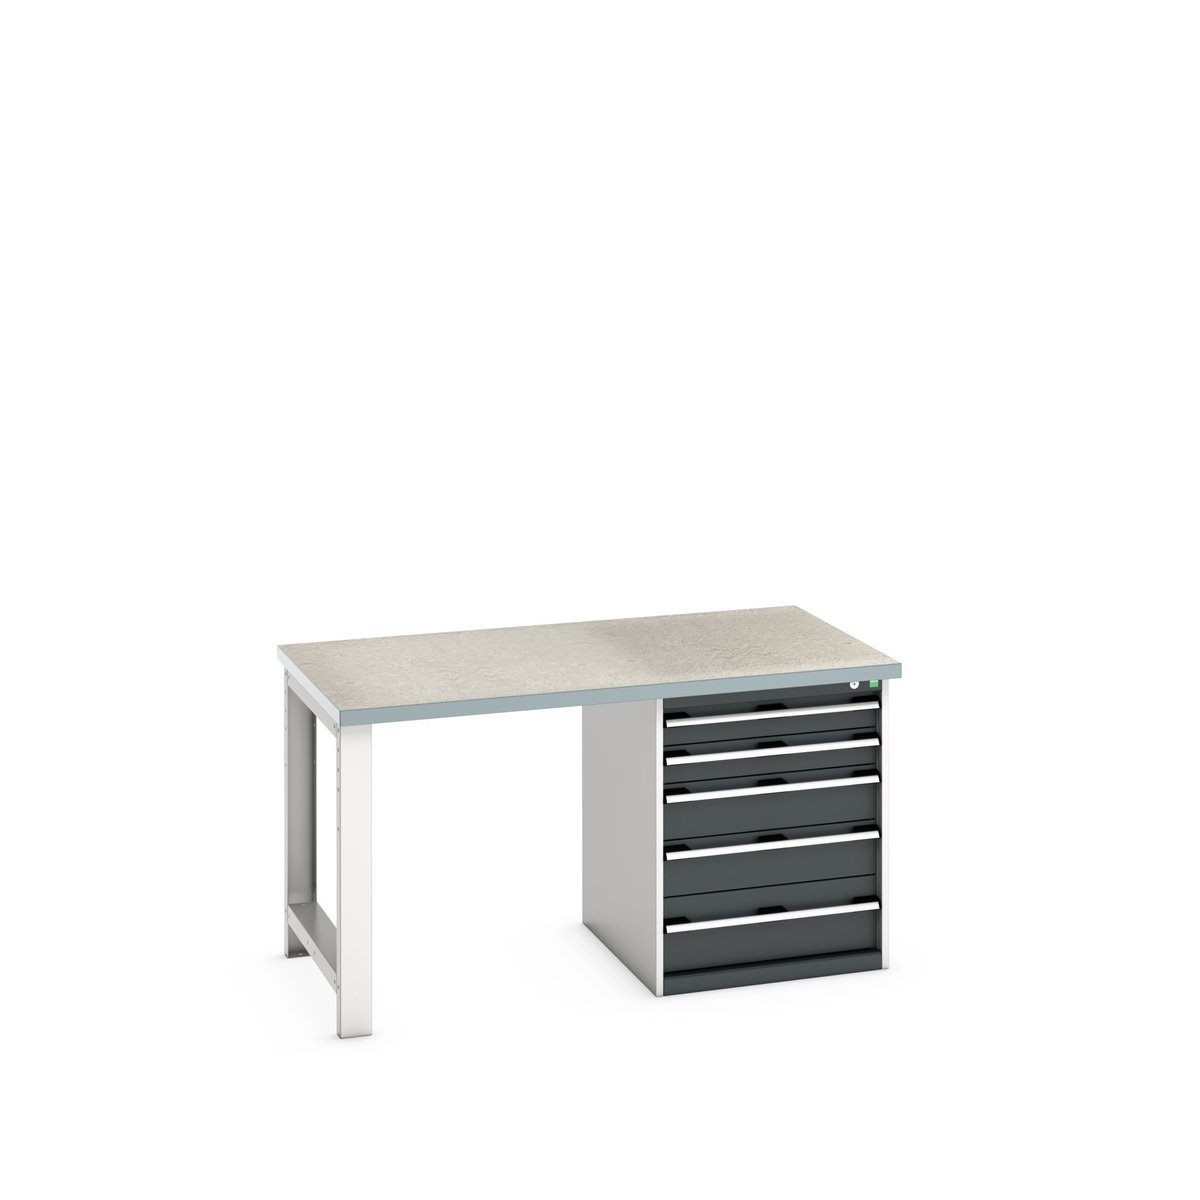 41004110. - cubio pedestal bench (lino)